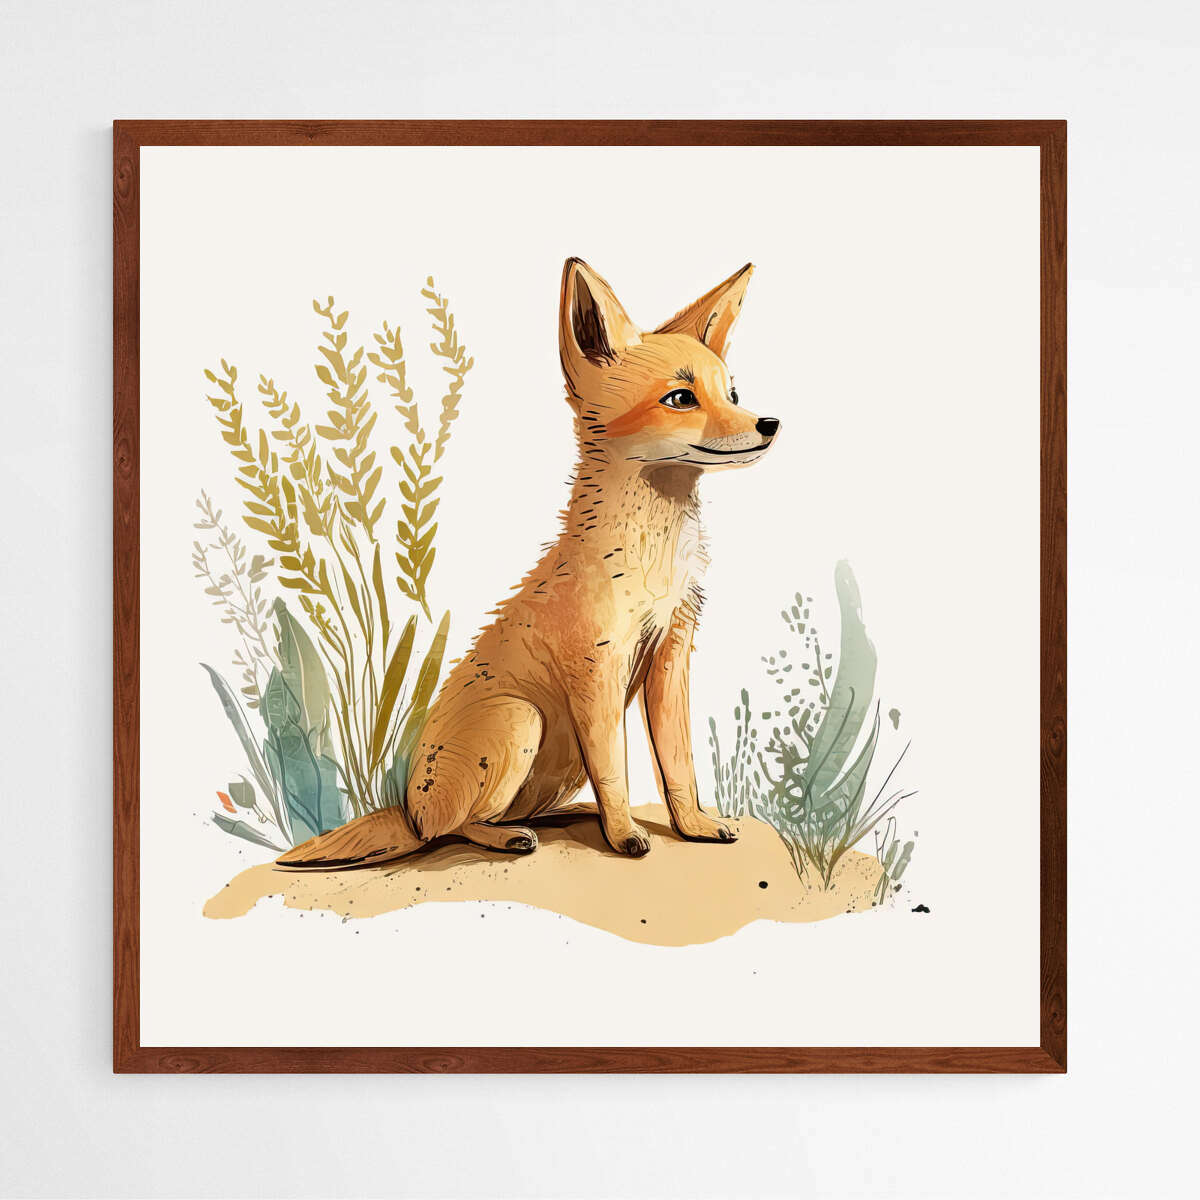 Dazzling Dingo | Nursery Wall Art Prints - The Canvas Hive